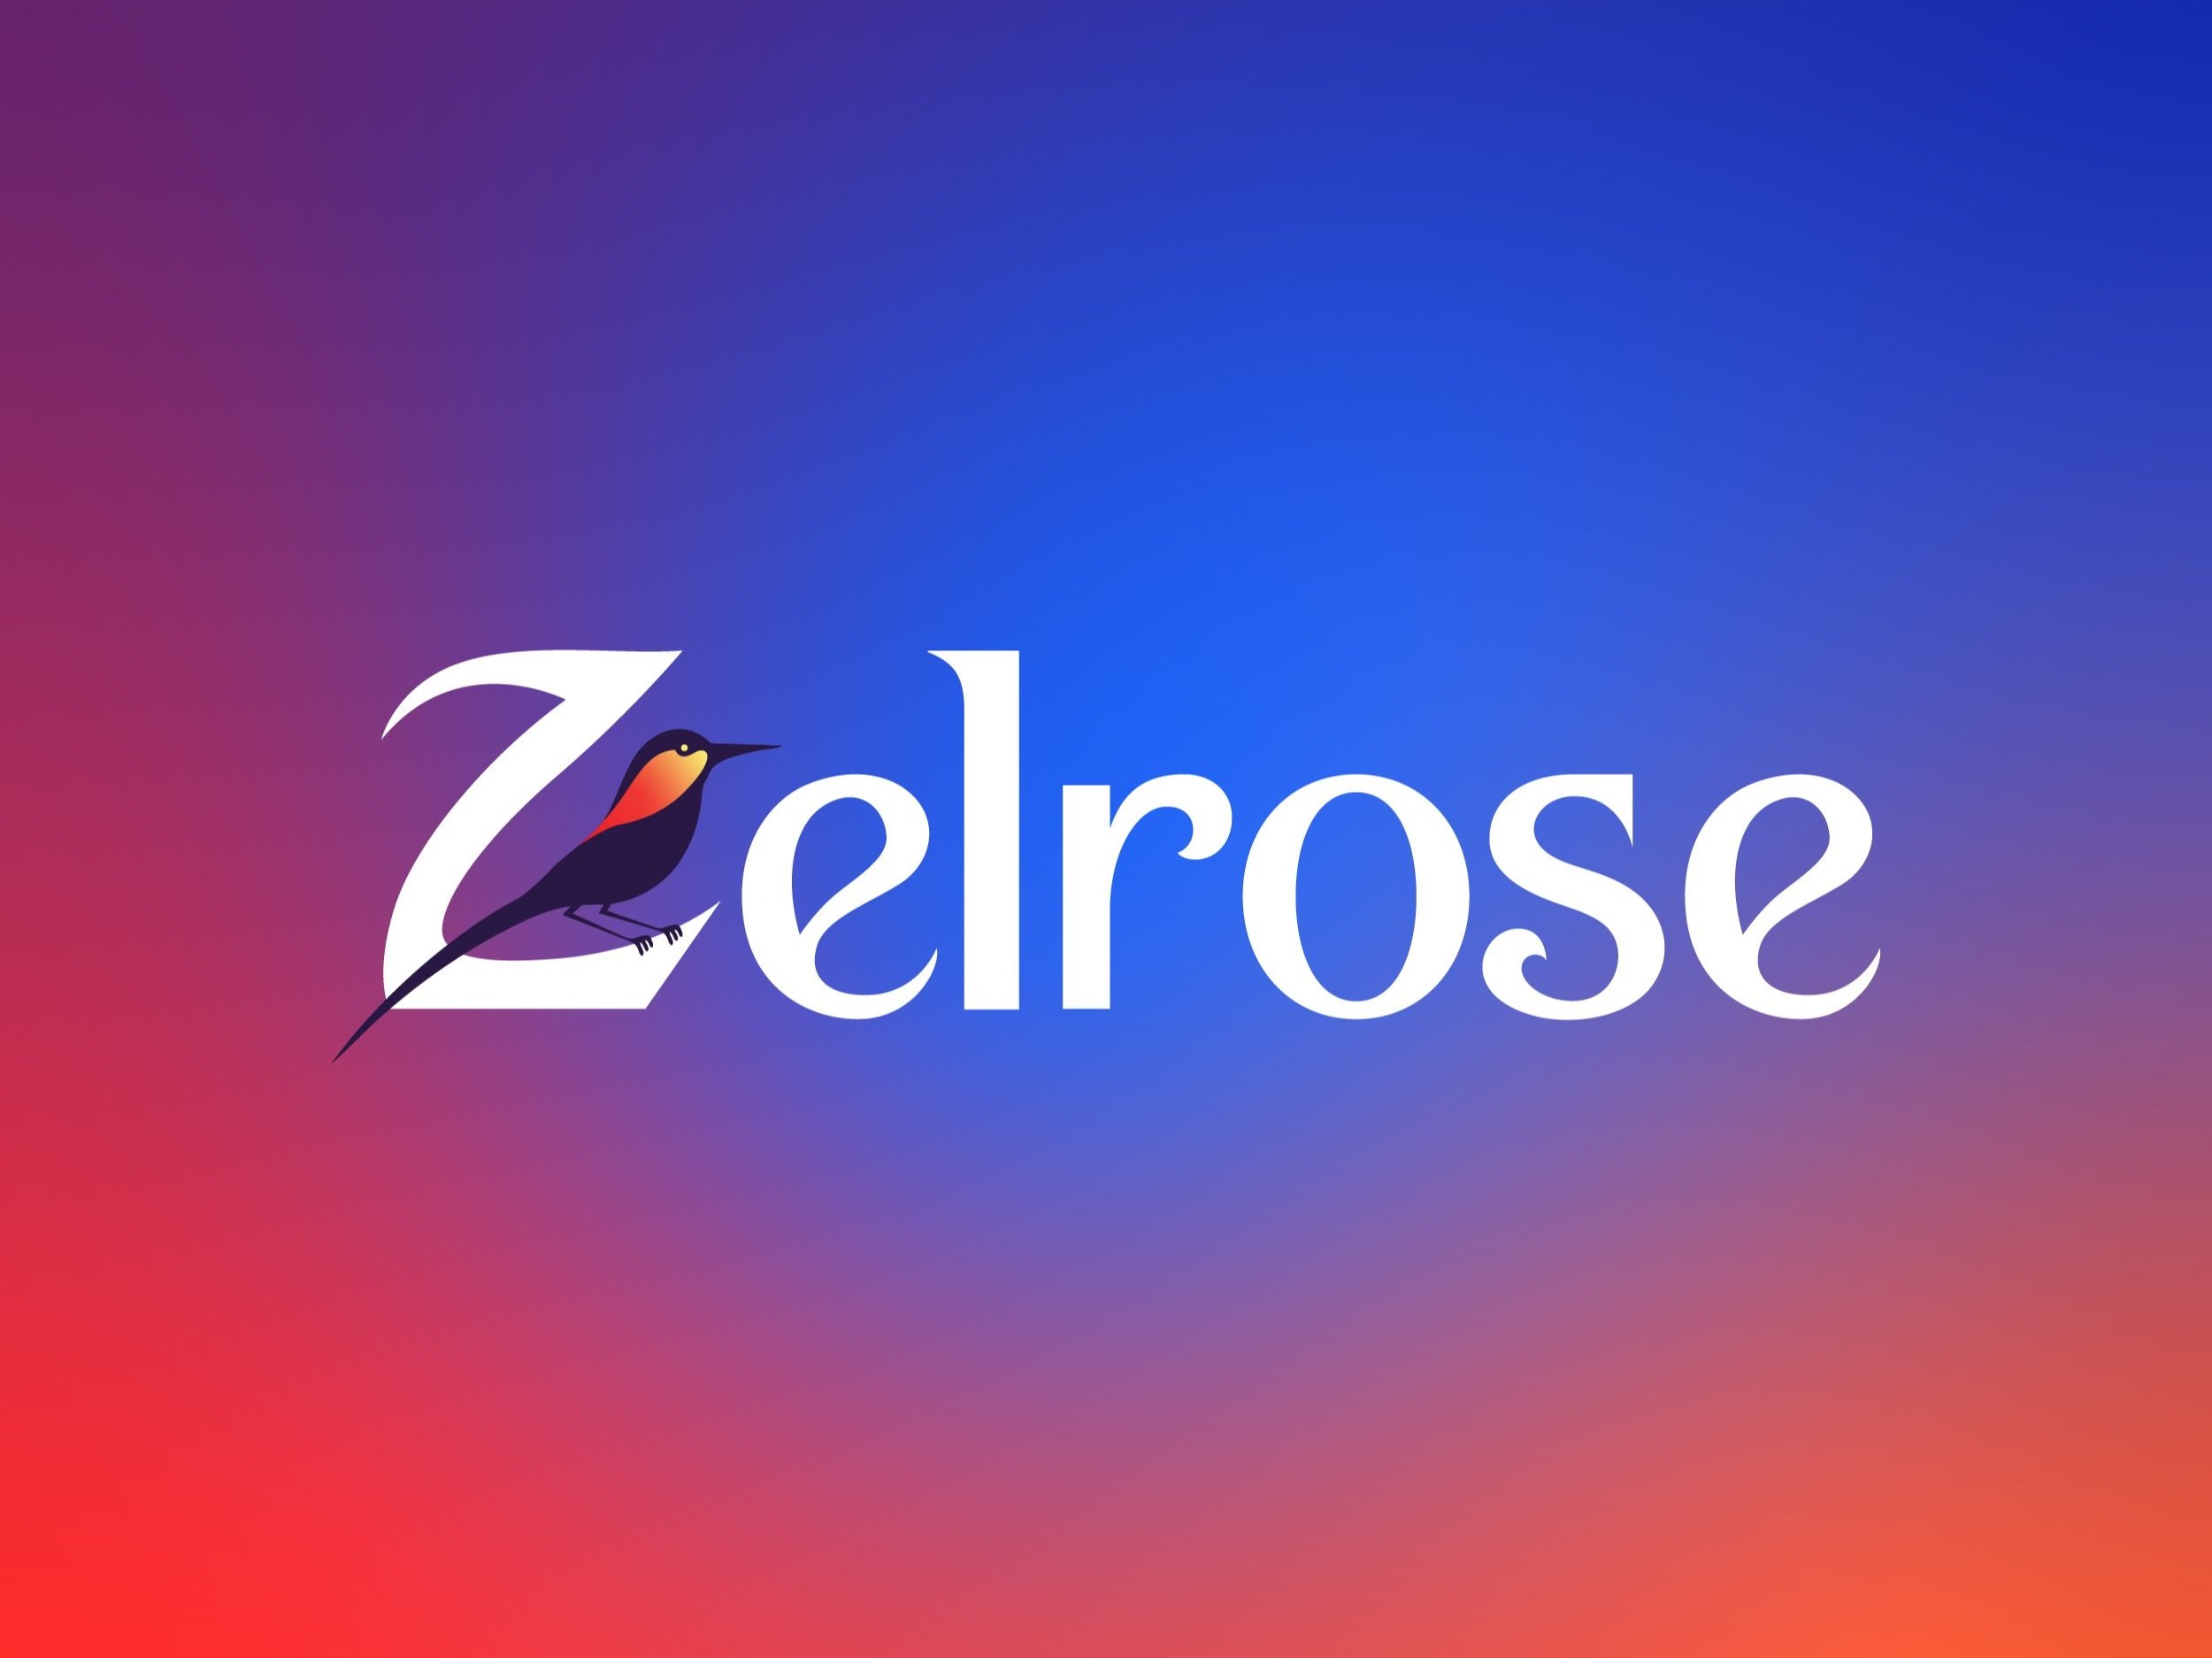 Zelrose-Logotype-Hero.jpg